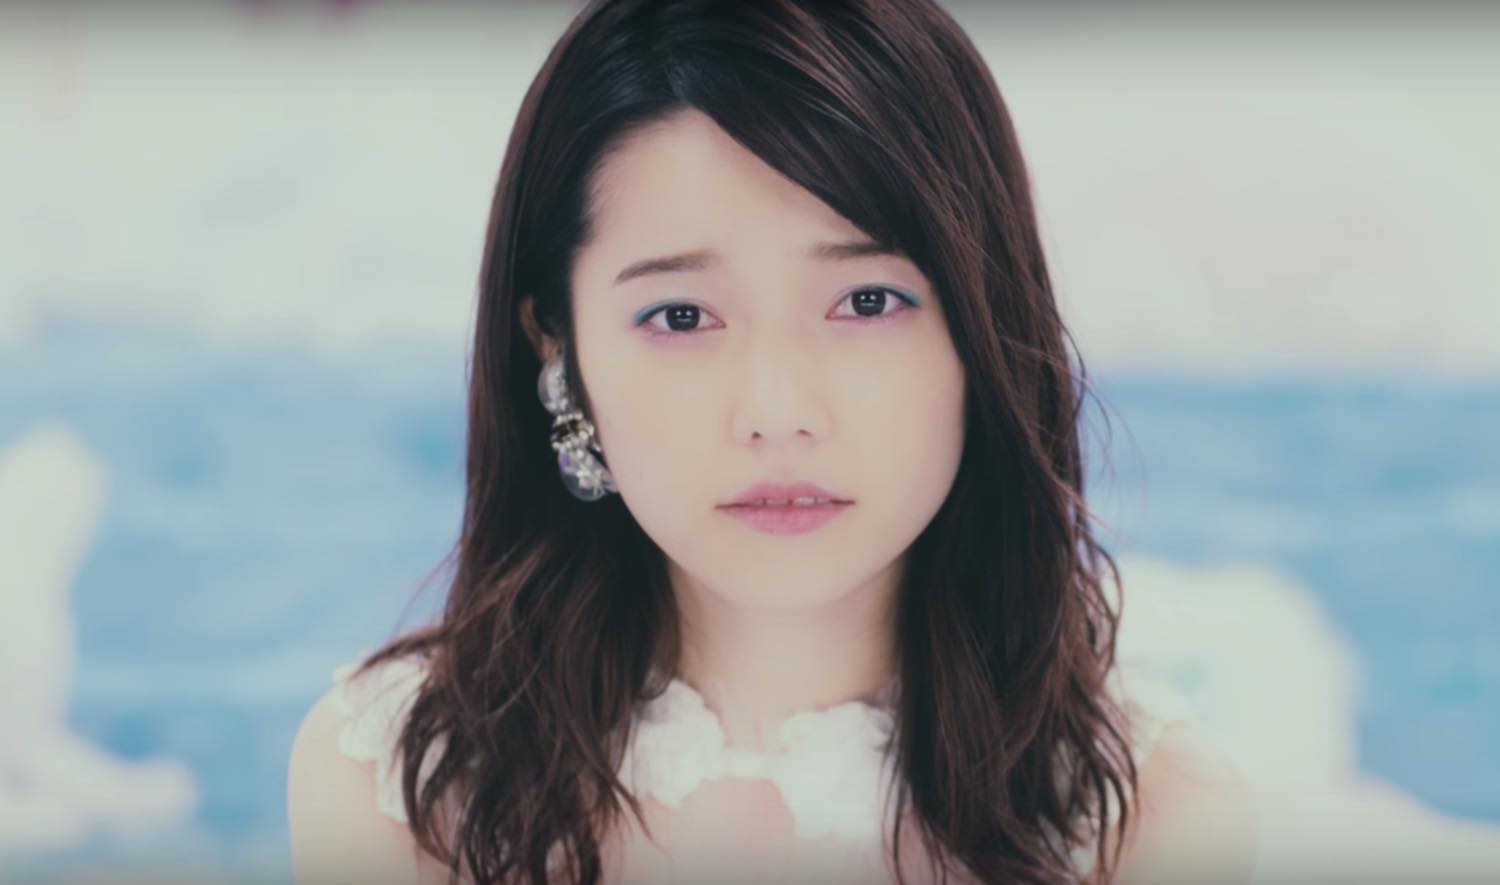 Haruka Shimazaki’s Graduation Song and Other MVs From AKB48’s 46th Single